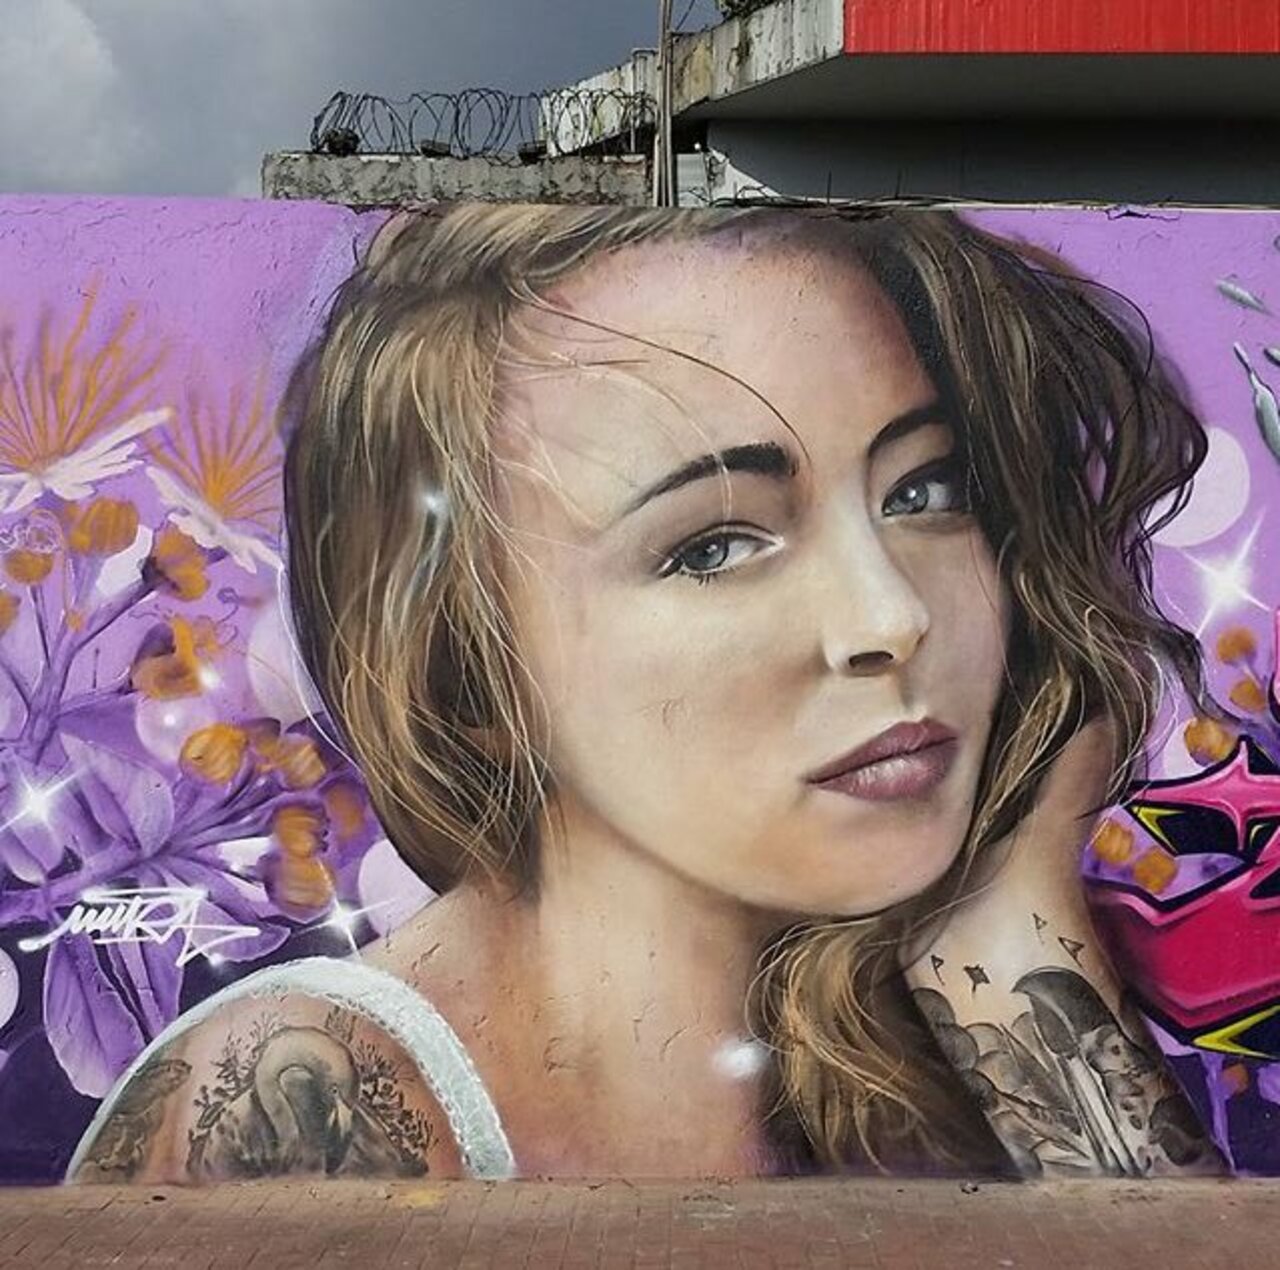 RT @bkedc: New Street Art by Mantarea 

#art #graffiti #mural #streetart https://t.co/lXBn00kc8g